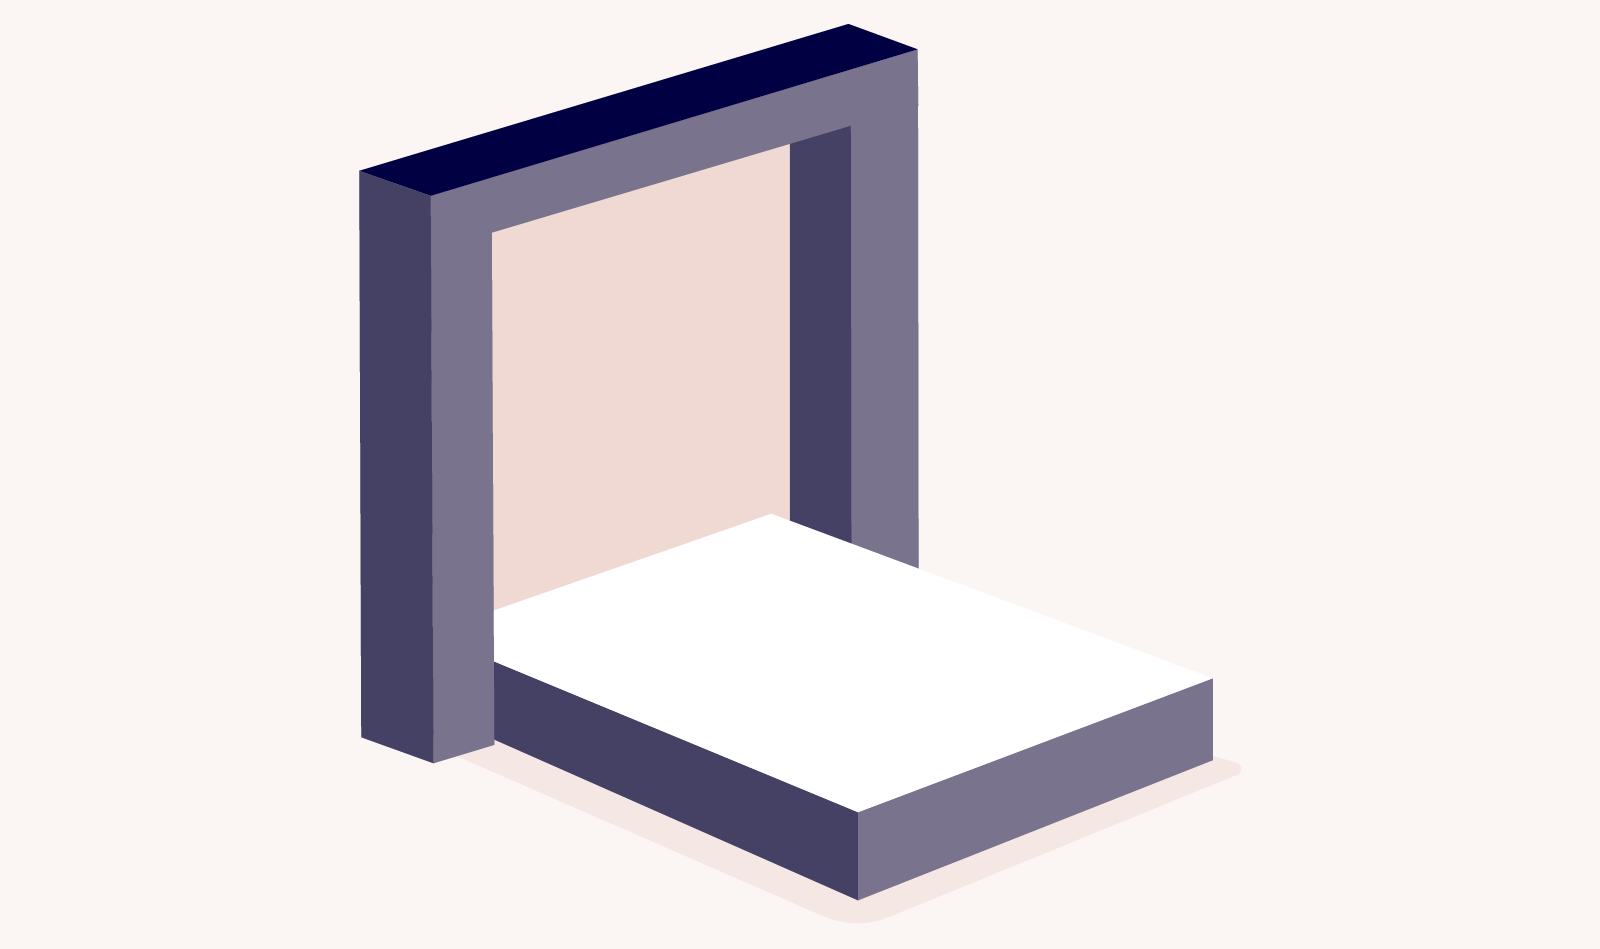 types of bed frames: illustration of a murphy bed frame